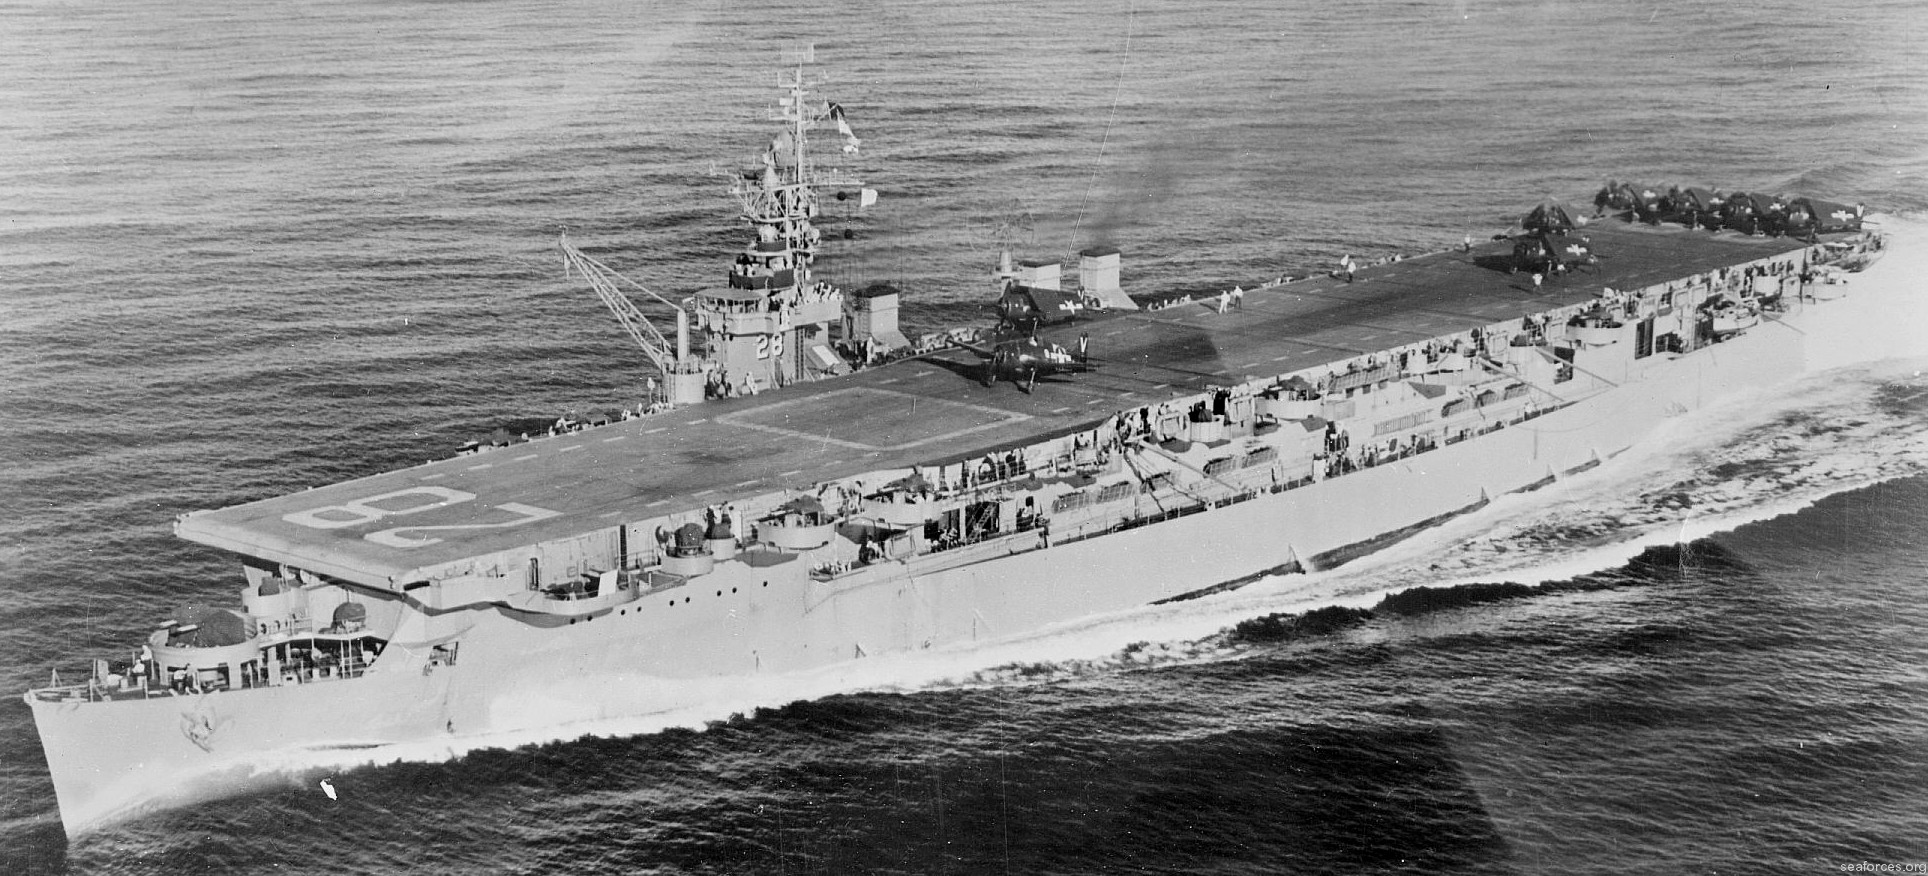 uss cabot cvl-28 aircraft carrier r-01 sps dedalo spanish navy 03